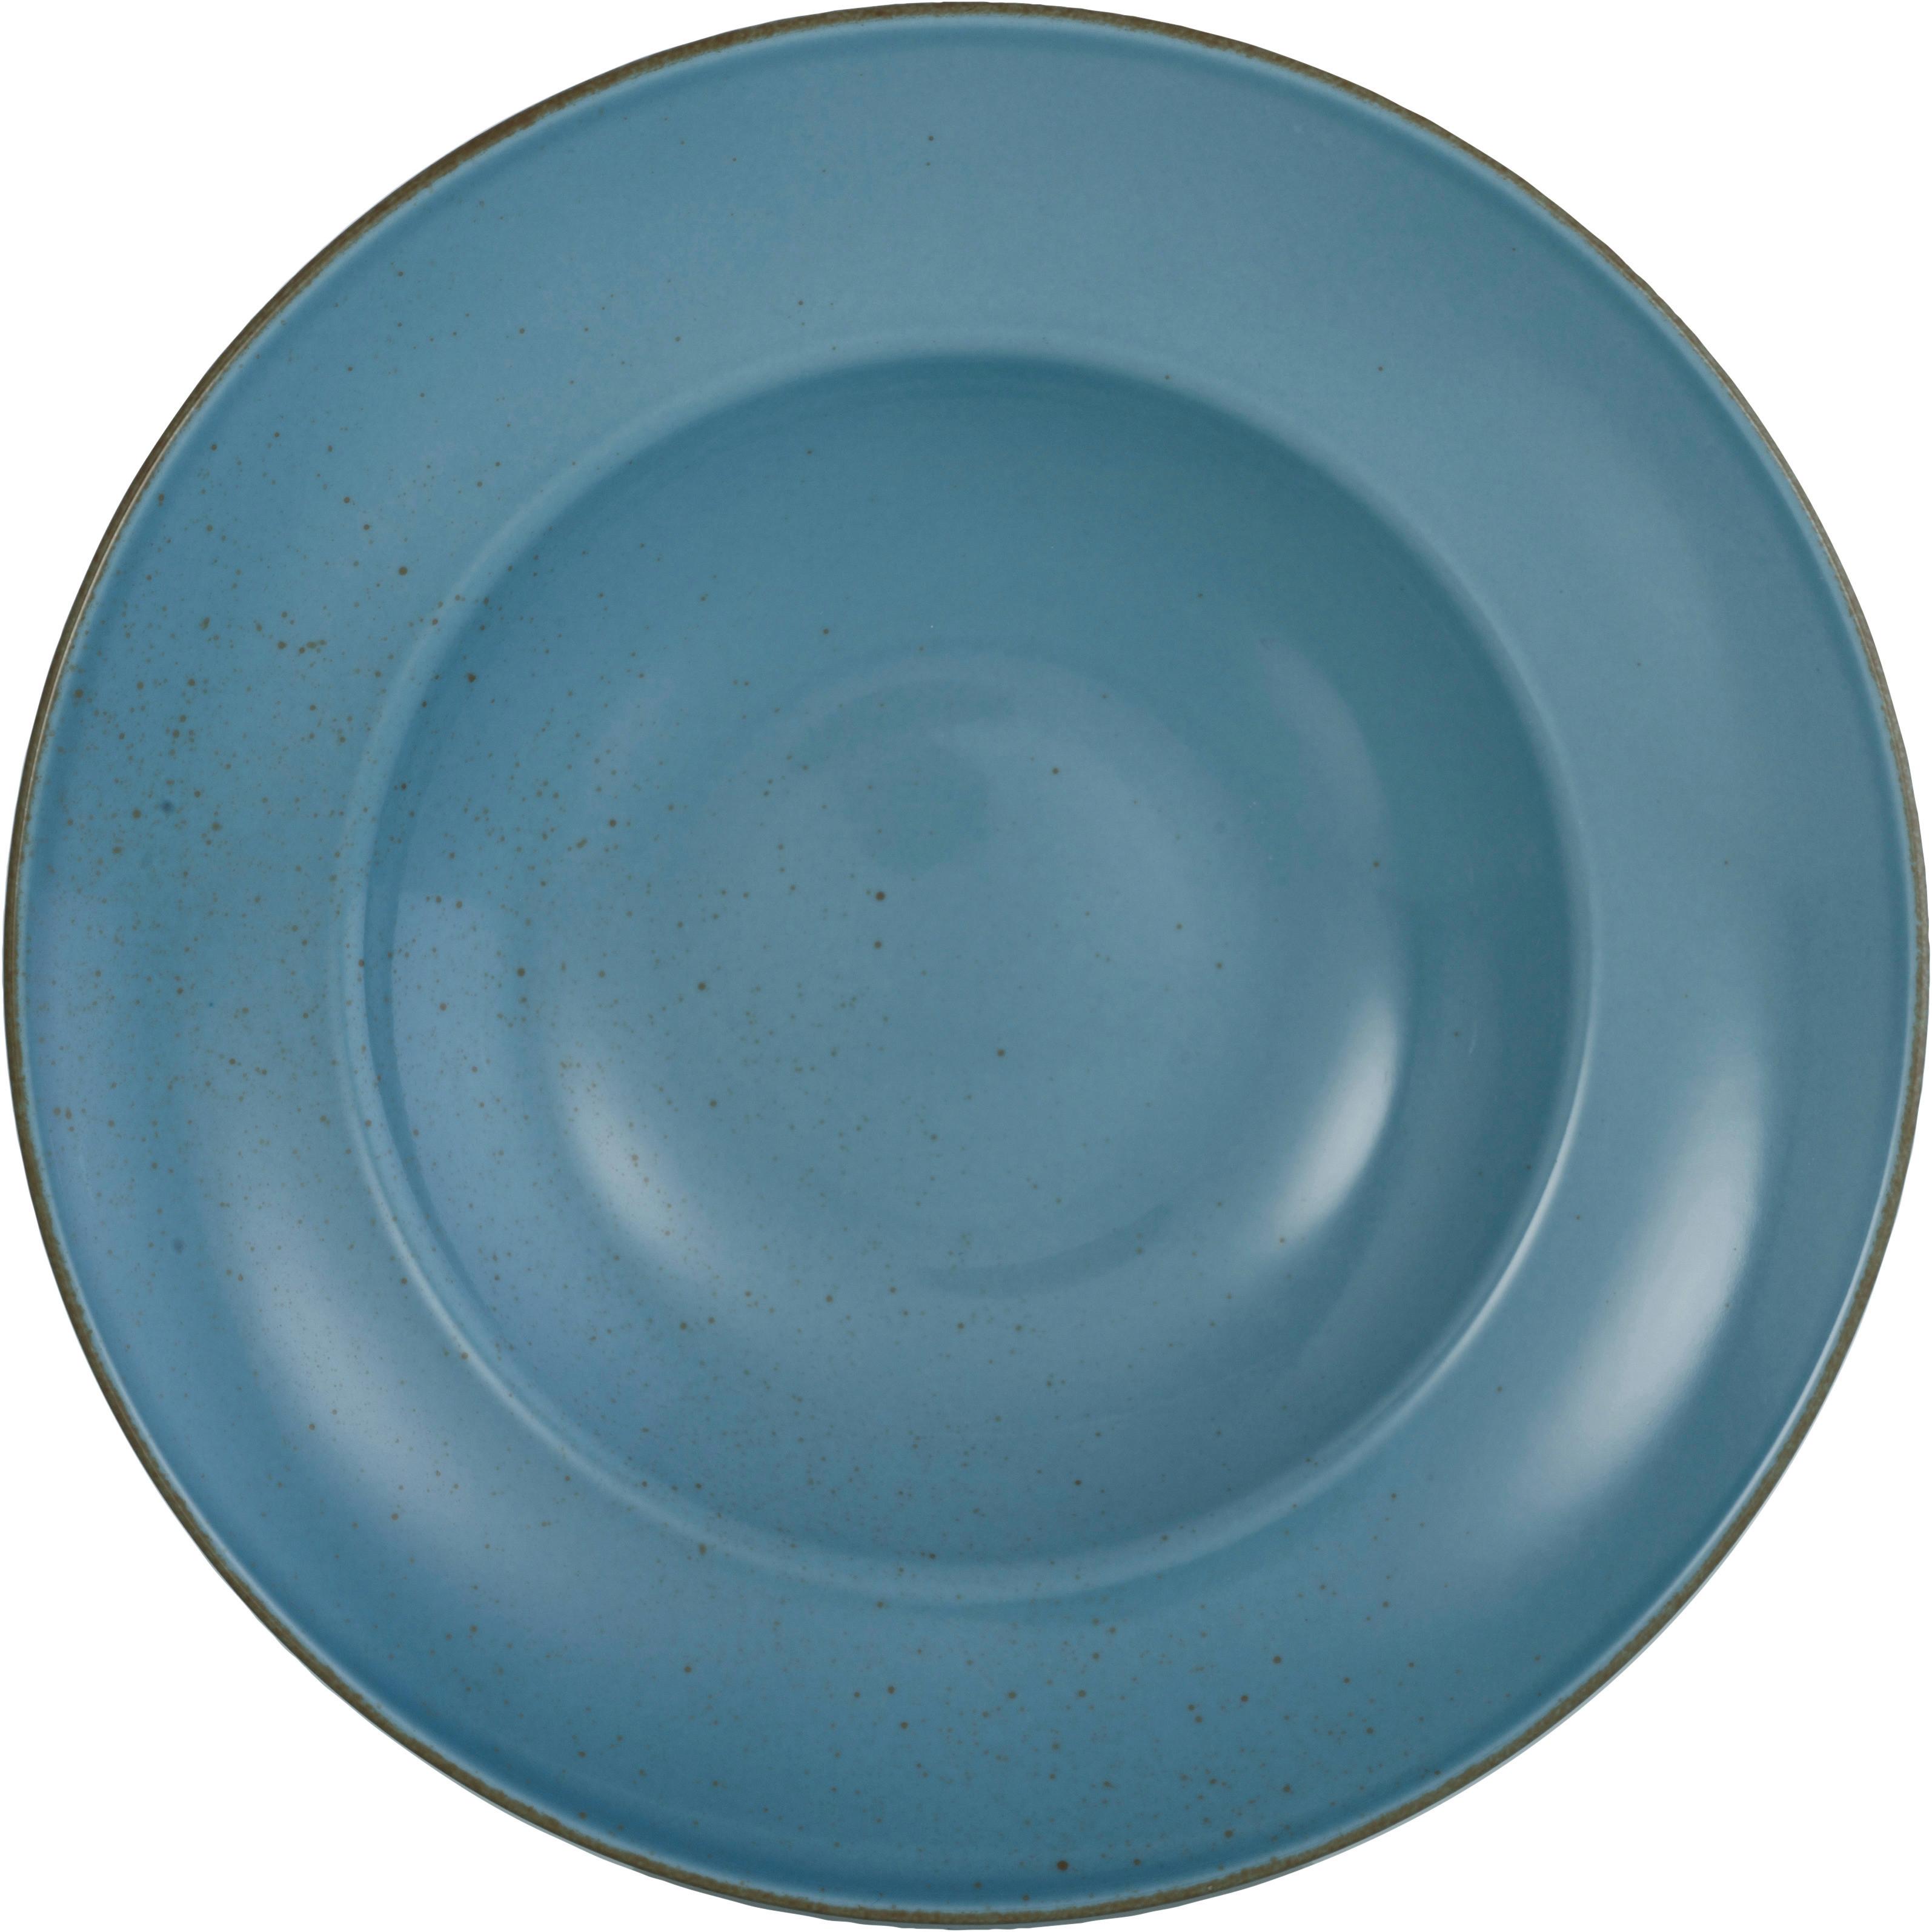 Pastateller Capri aus Porzellan Ø ca. 27cm - Blau, MODERN, Keramik (27/27/4cm) - Premium Living